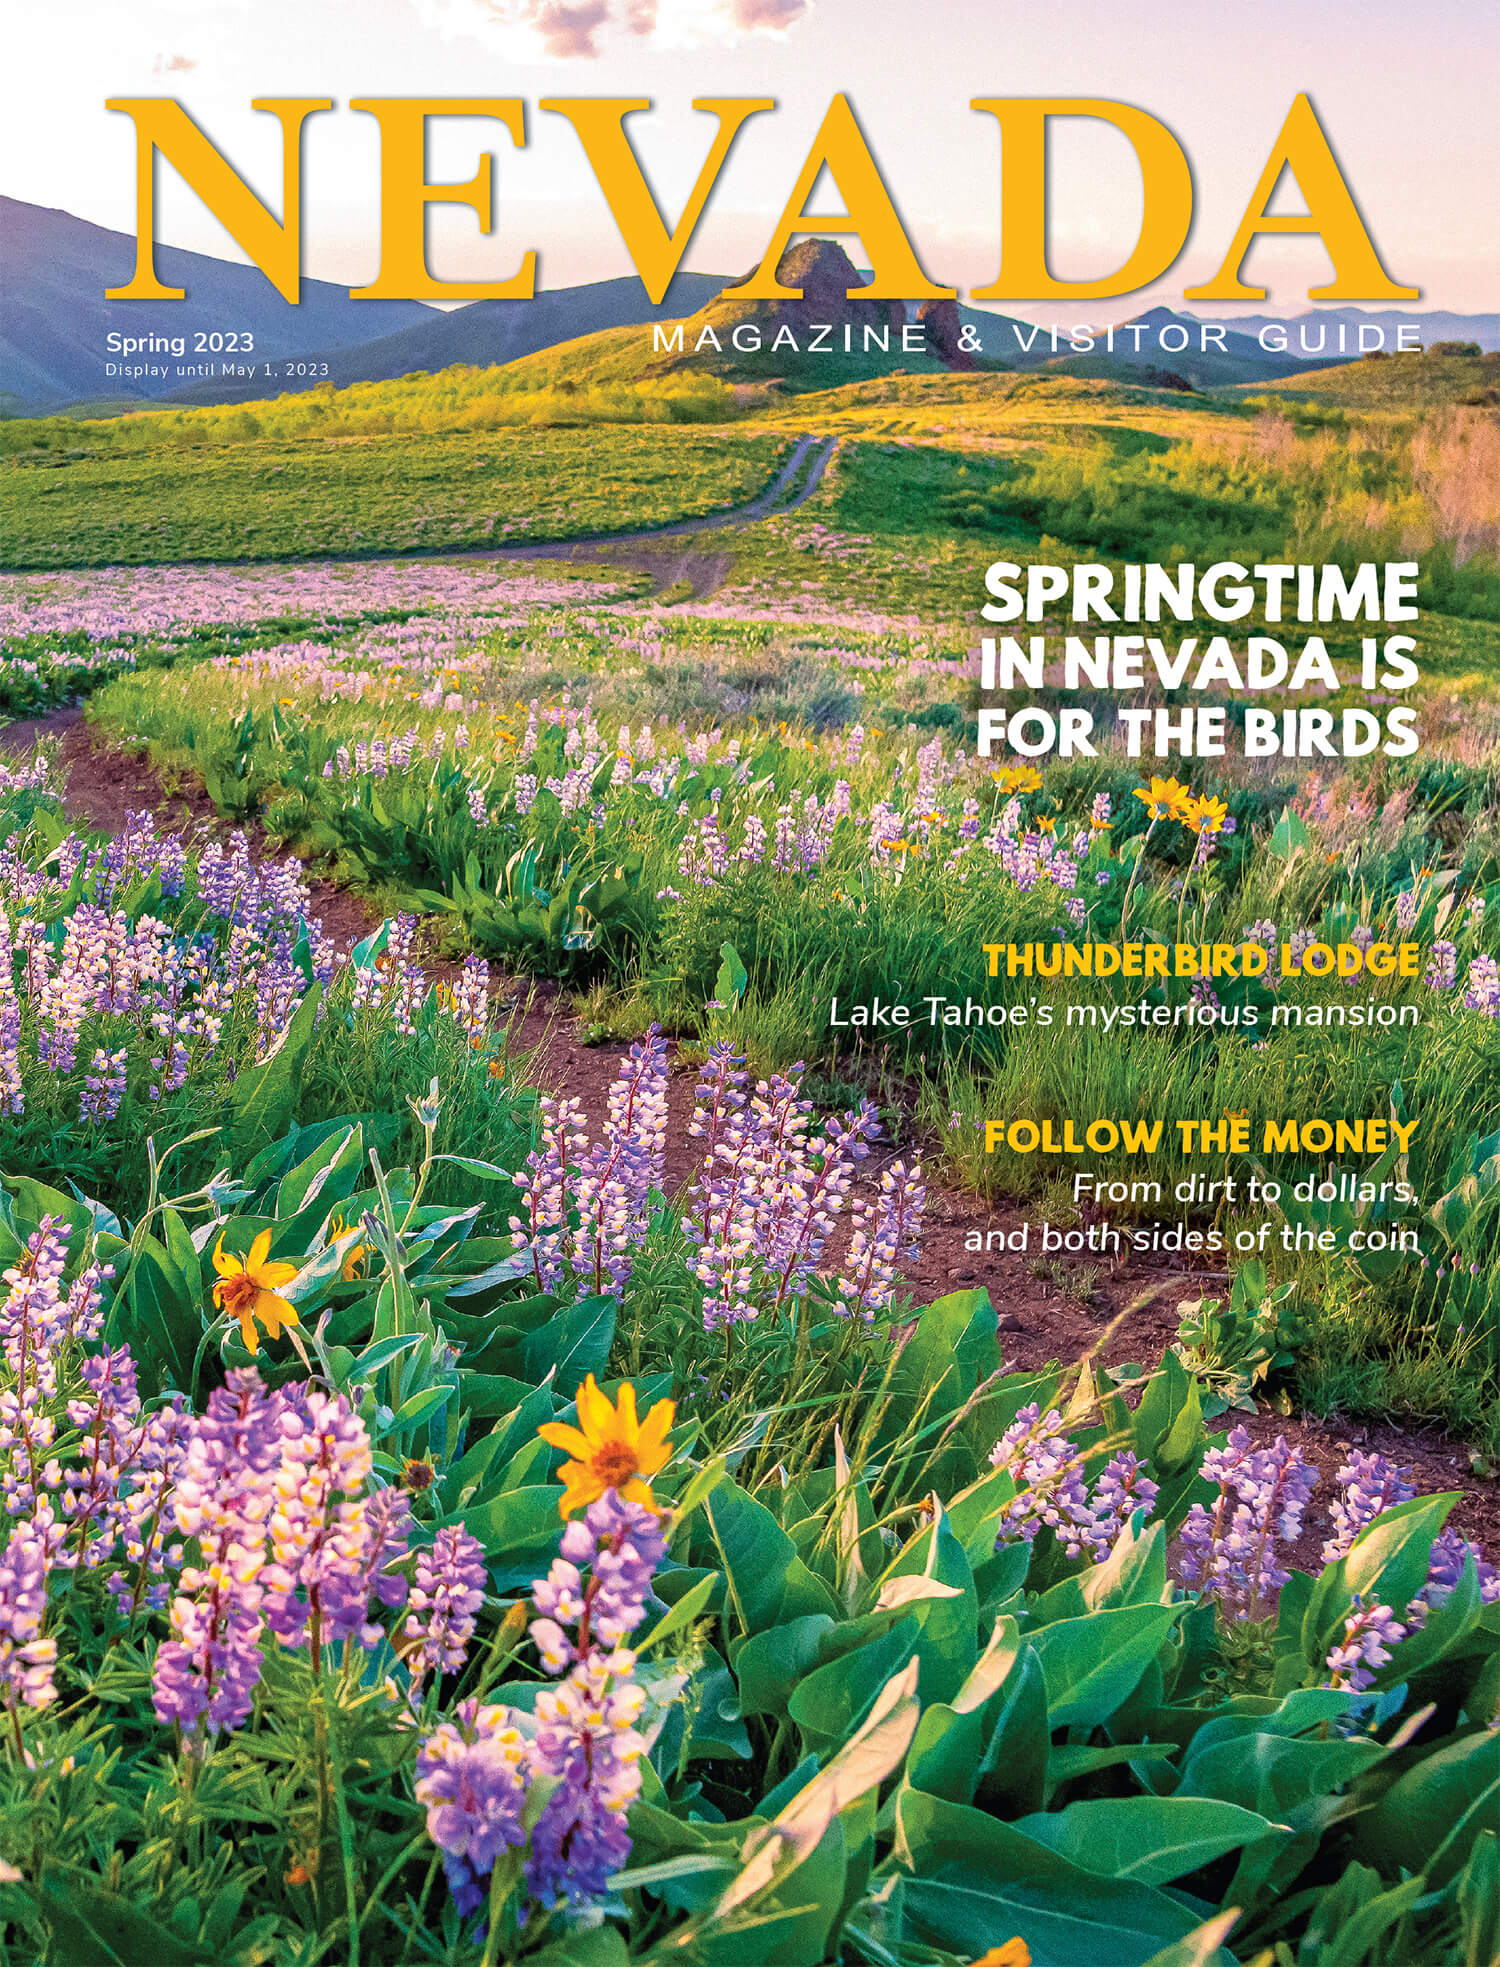 Nevada Magazine Spring 2023 Cover Photo